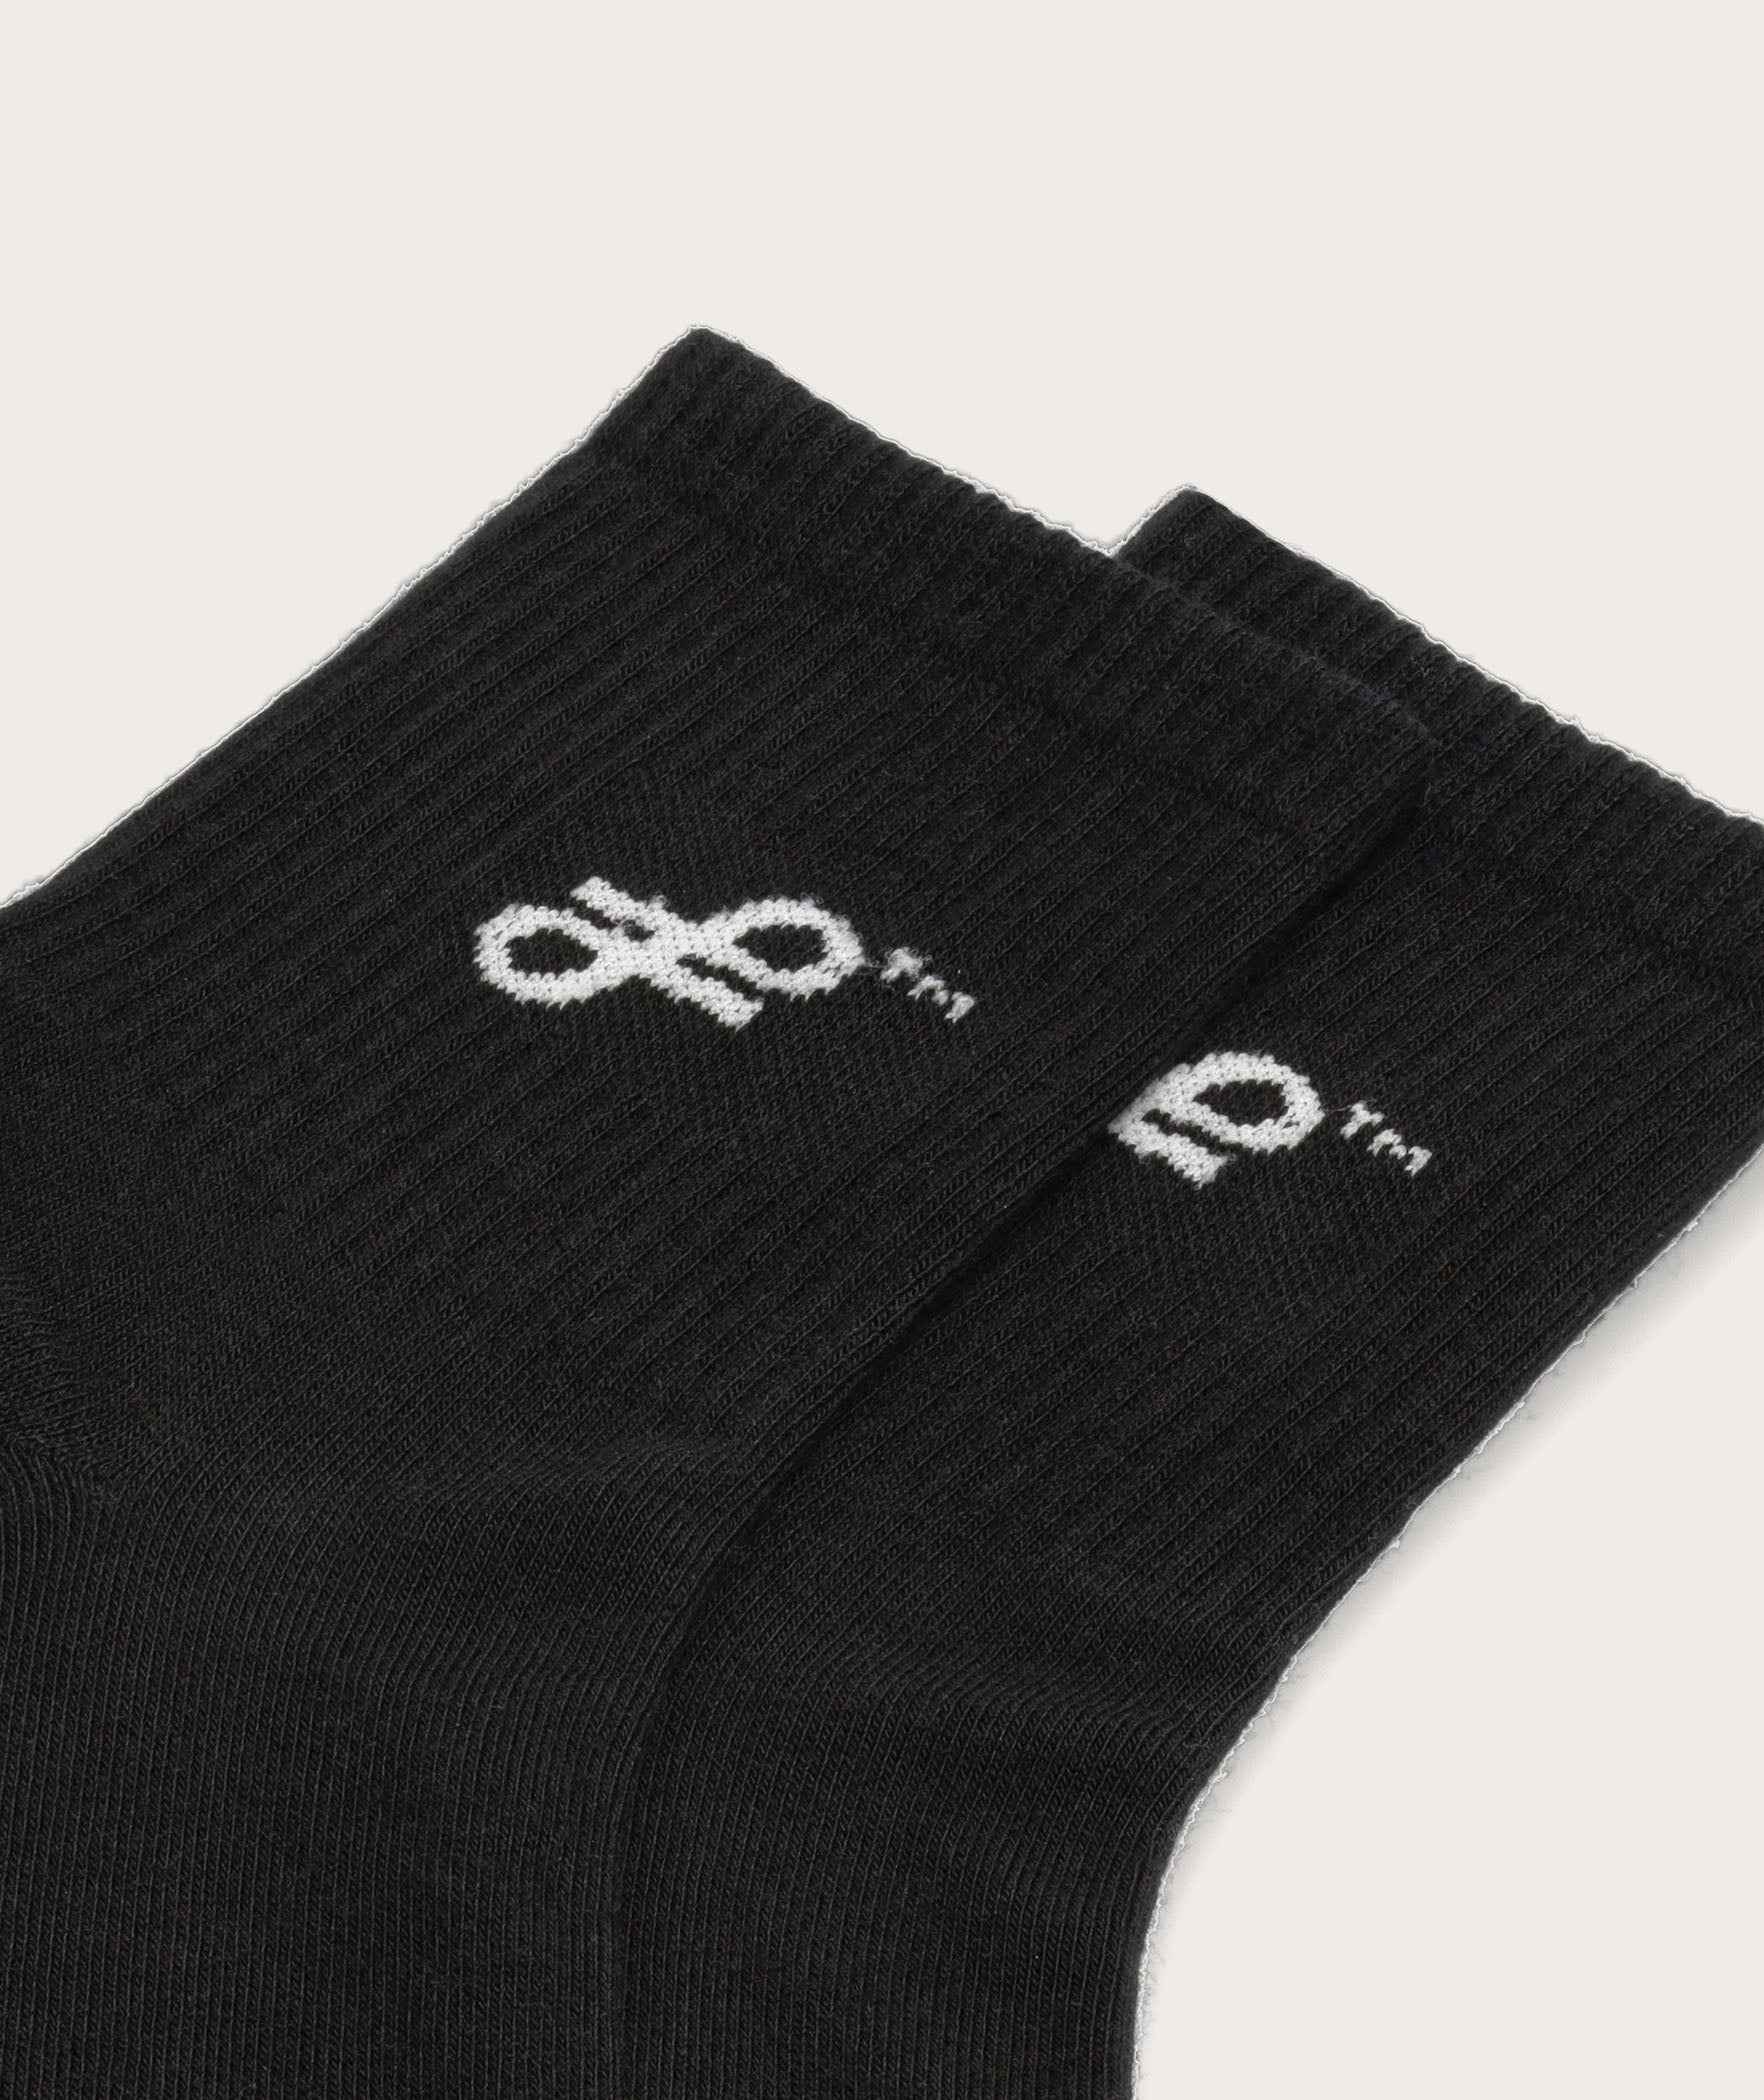 Socks FOM Active - Black/ Off-White Knot (Size 7-11)